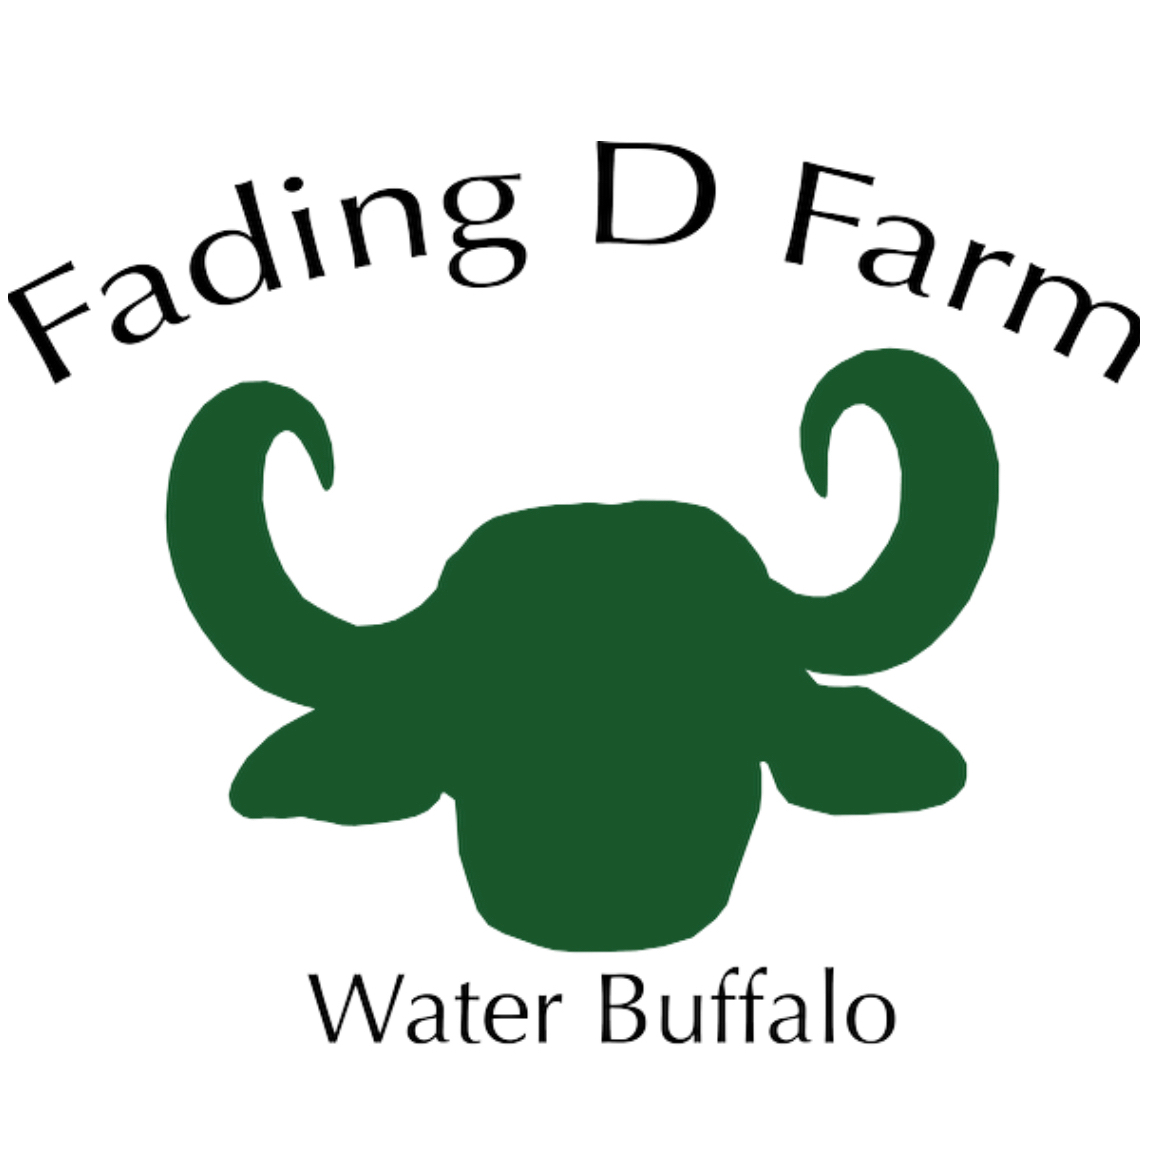 Fading D Farm